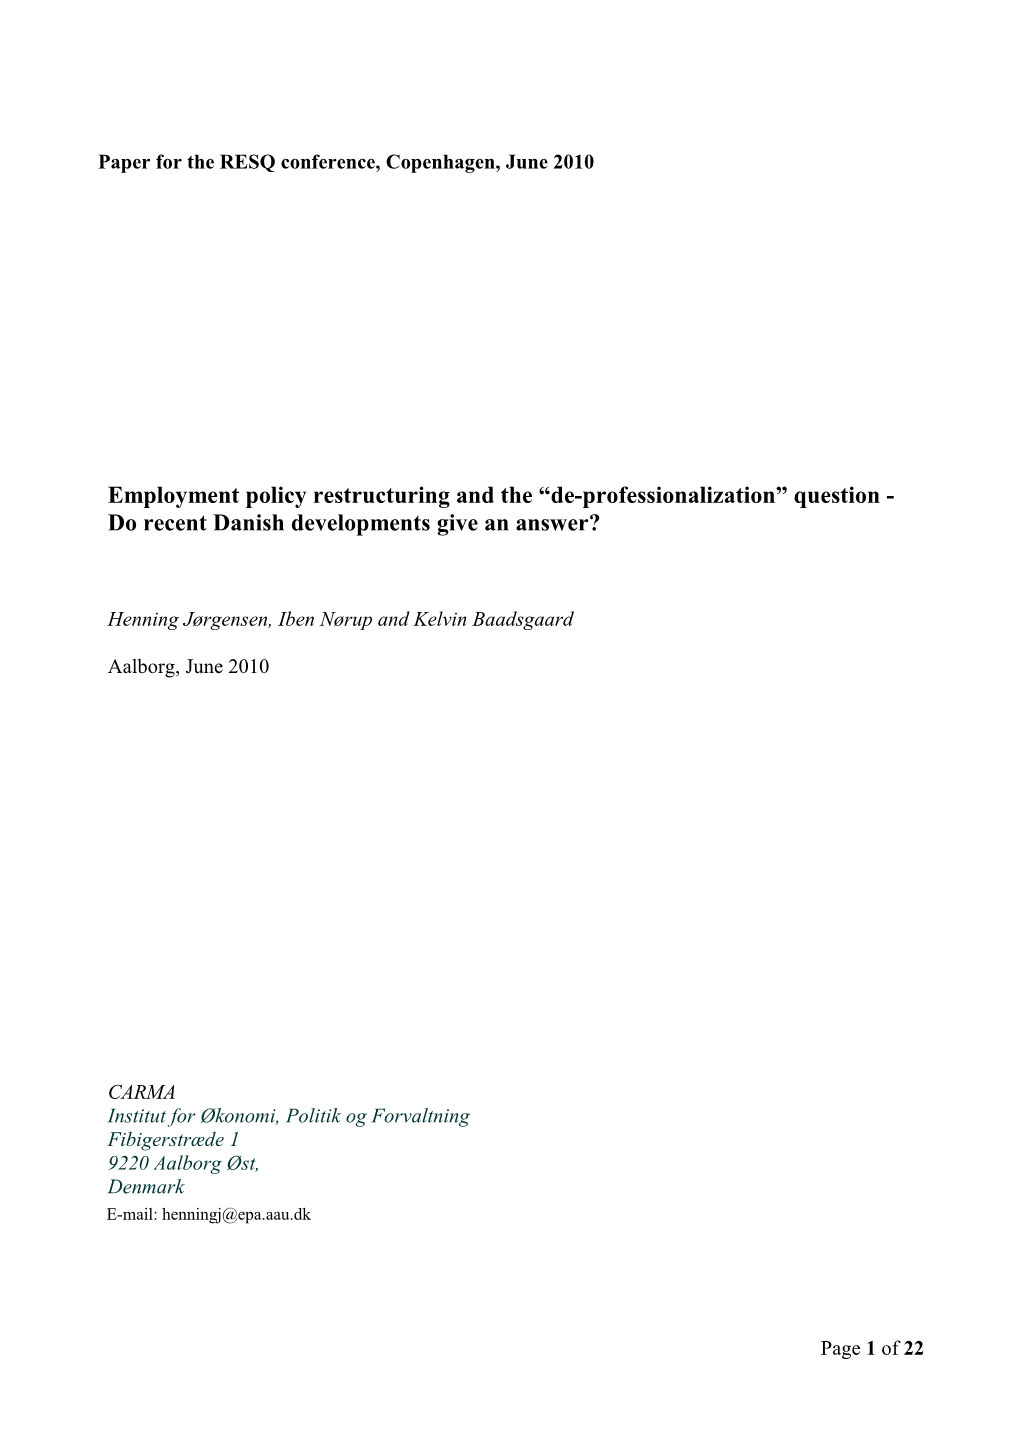 Paper for the RESQ Conference, Copenhagen, June 2010